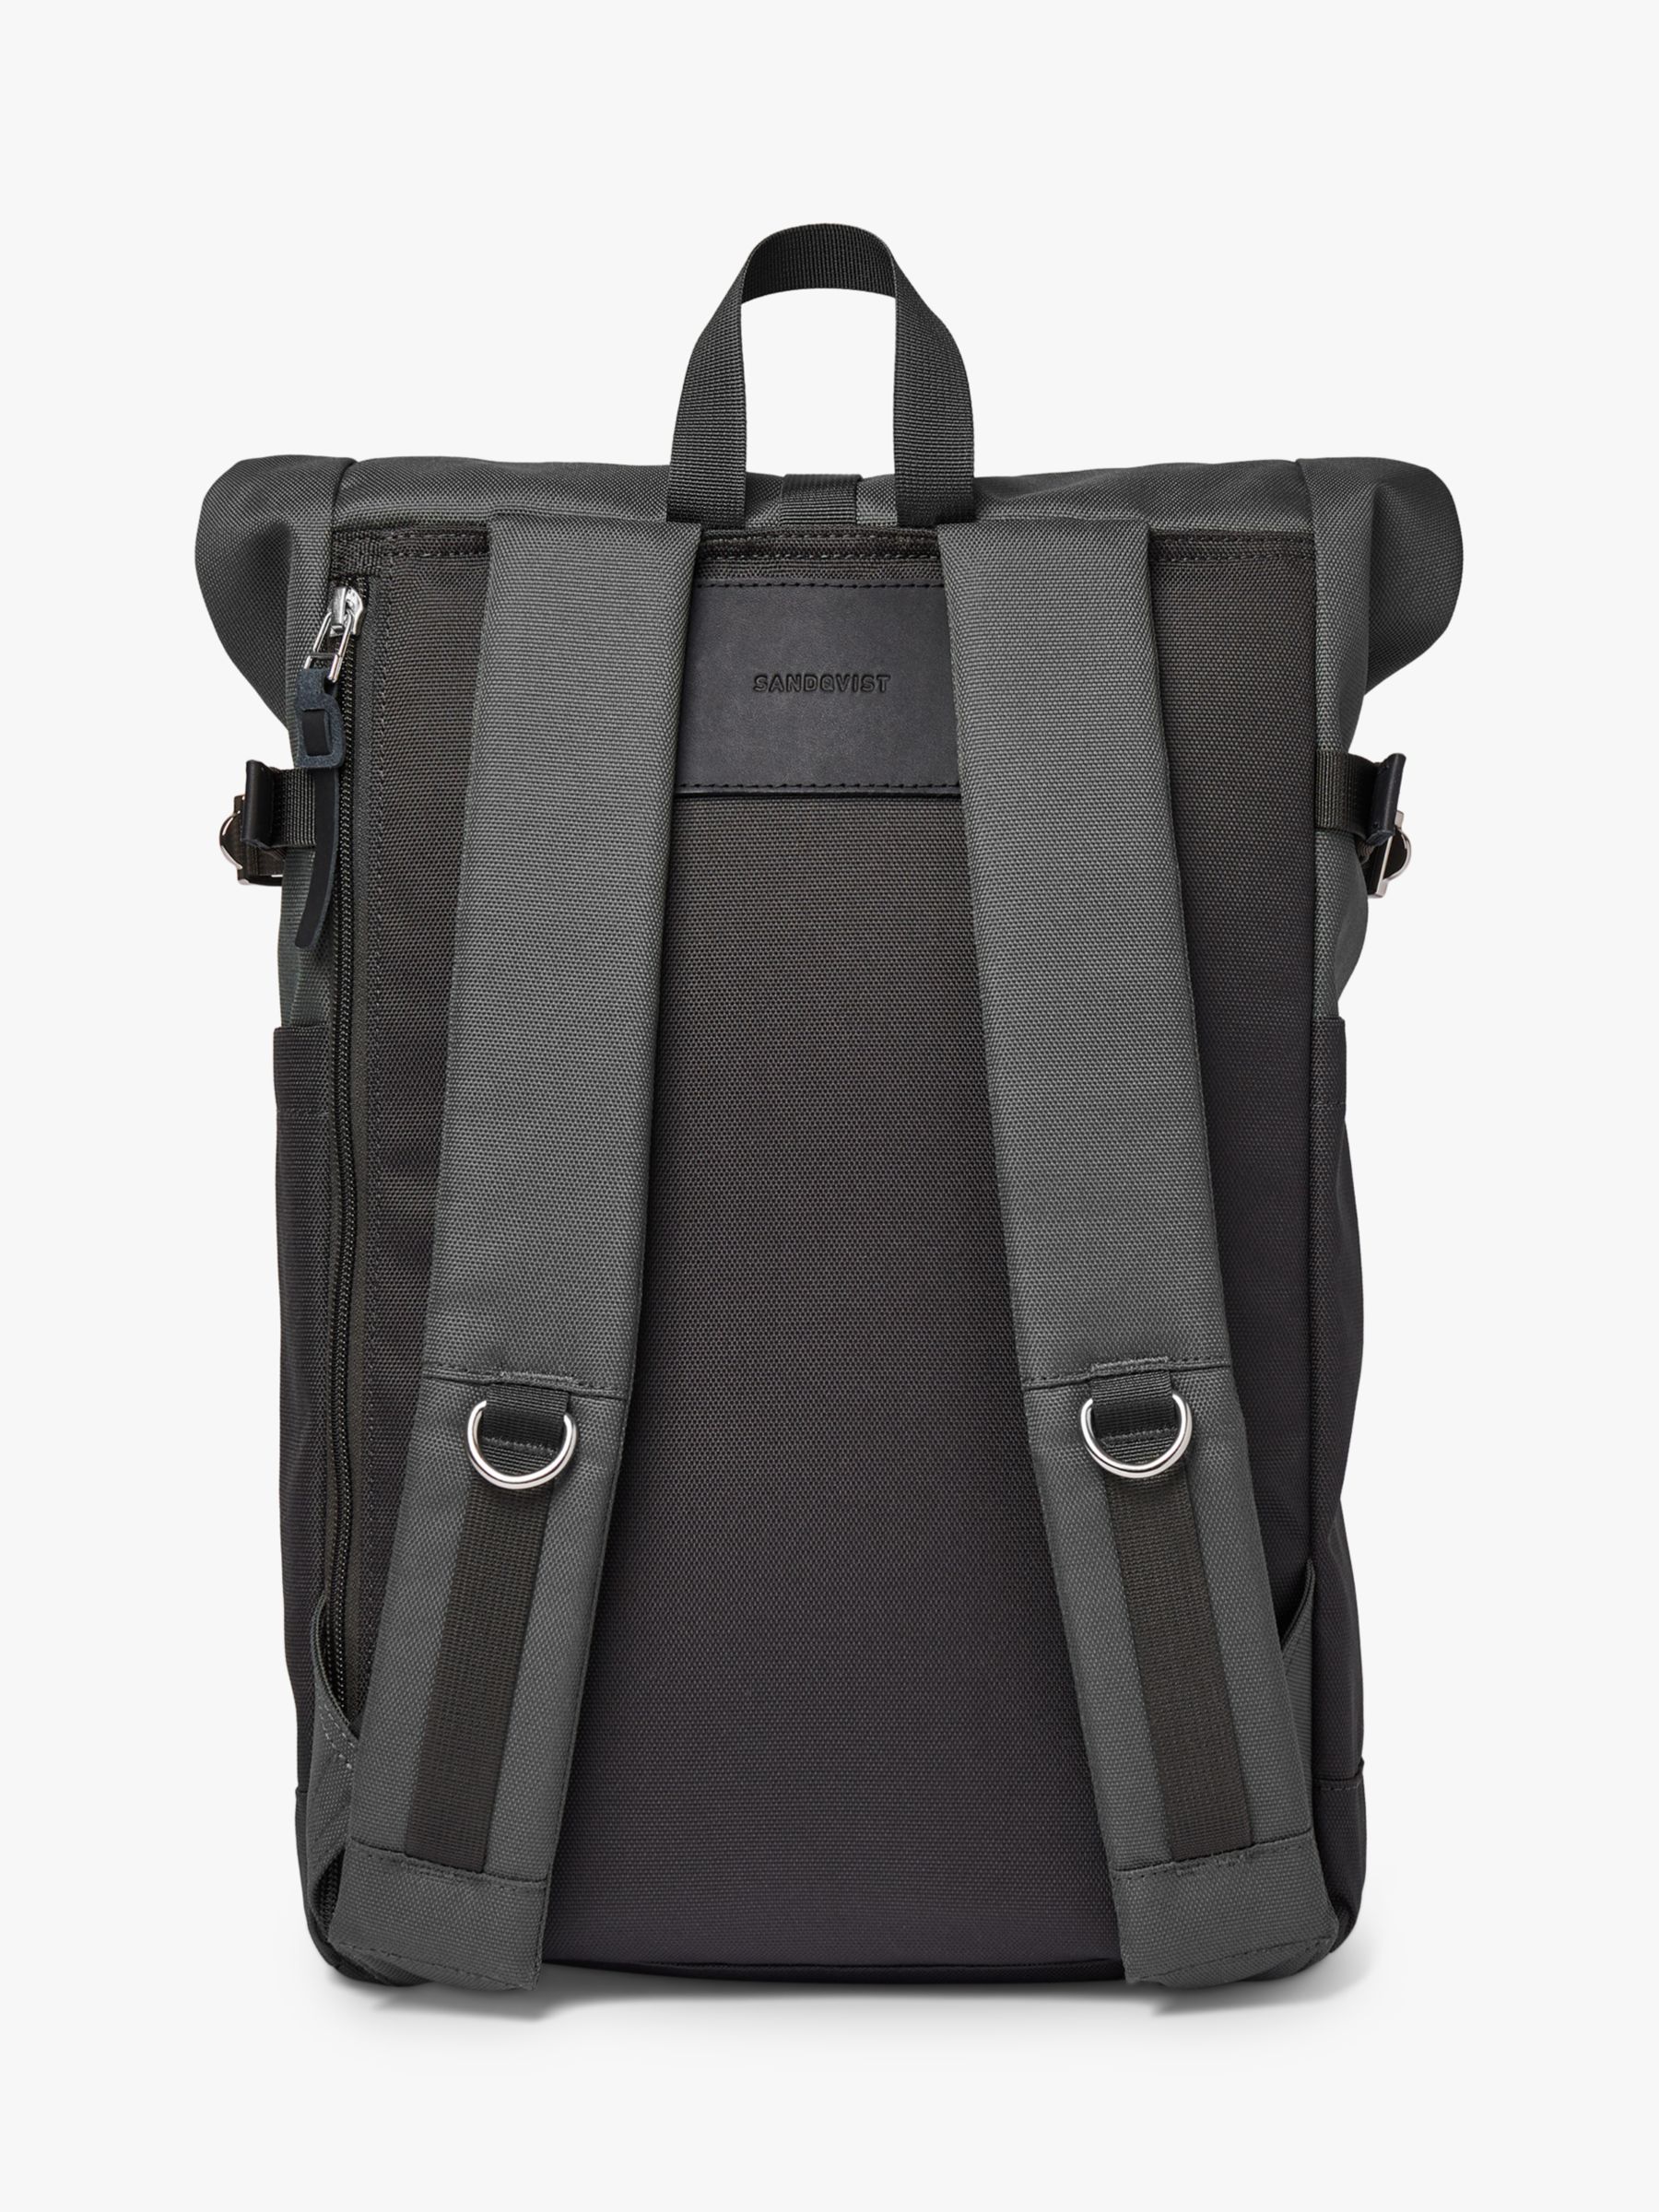 Sandqvist Ilon Roll-Top Backpack, 18L, Black at John Lewis & Partners